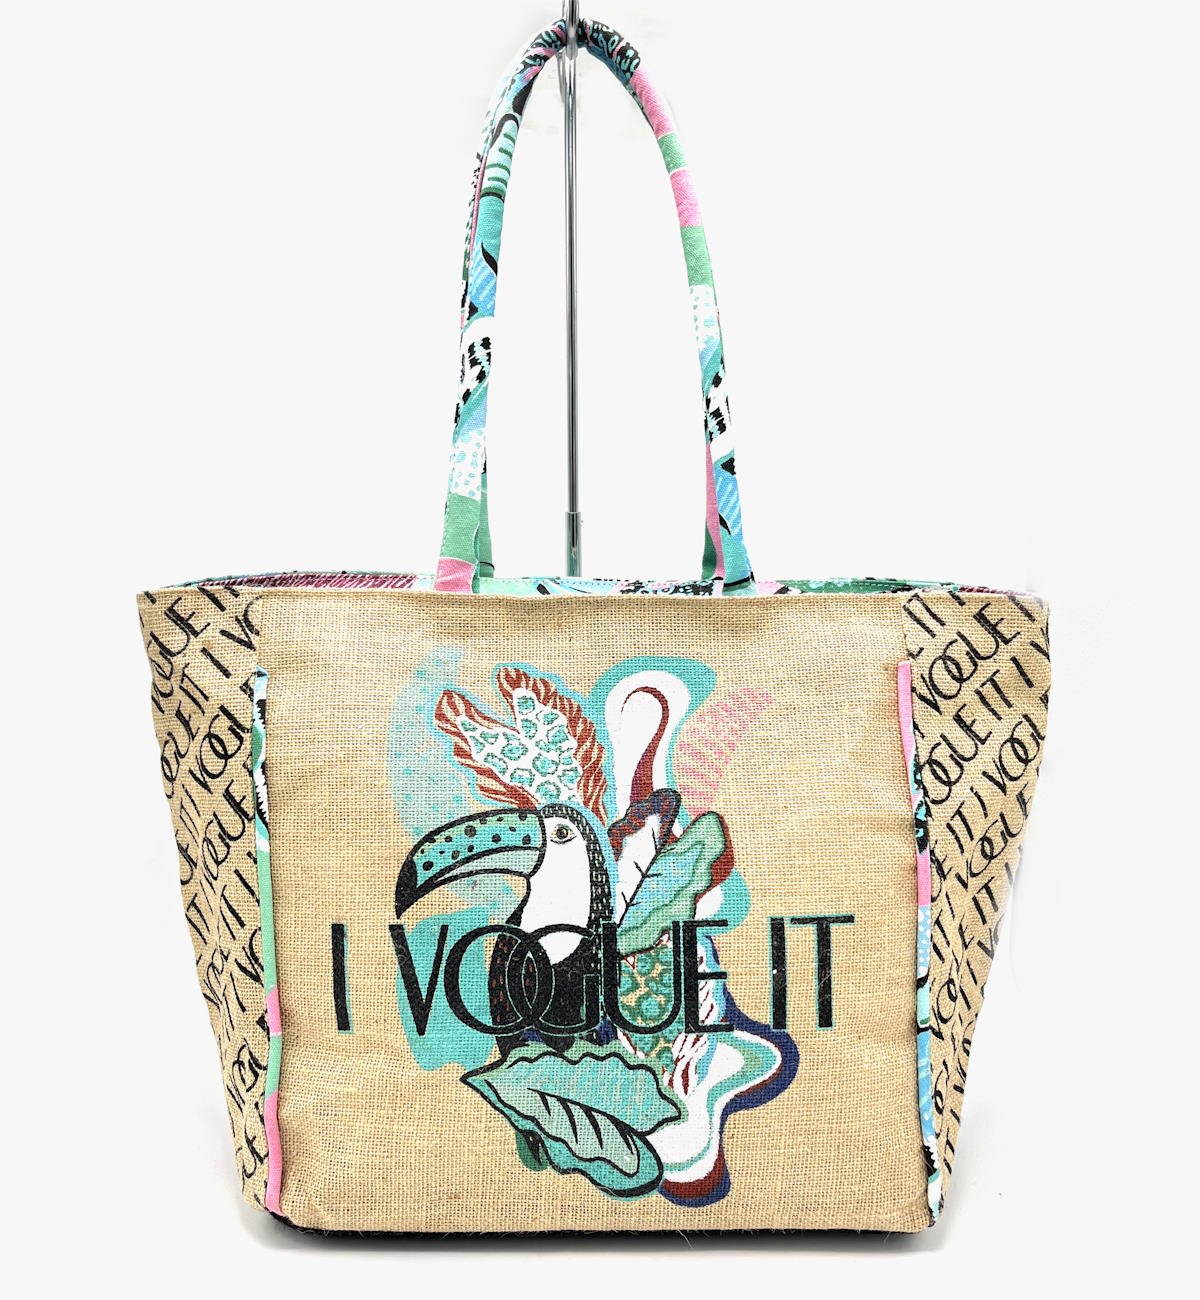 Shop/Beach Bag, Brand I Vogue It, art. 44832